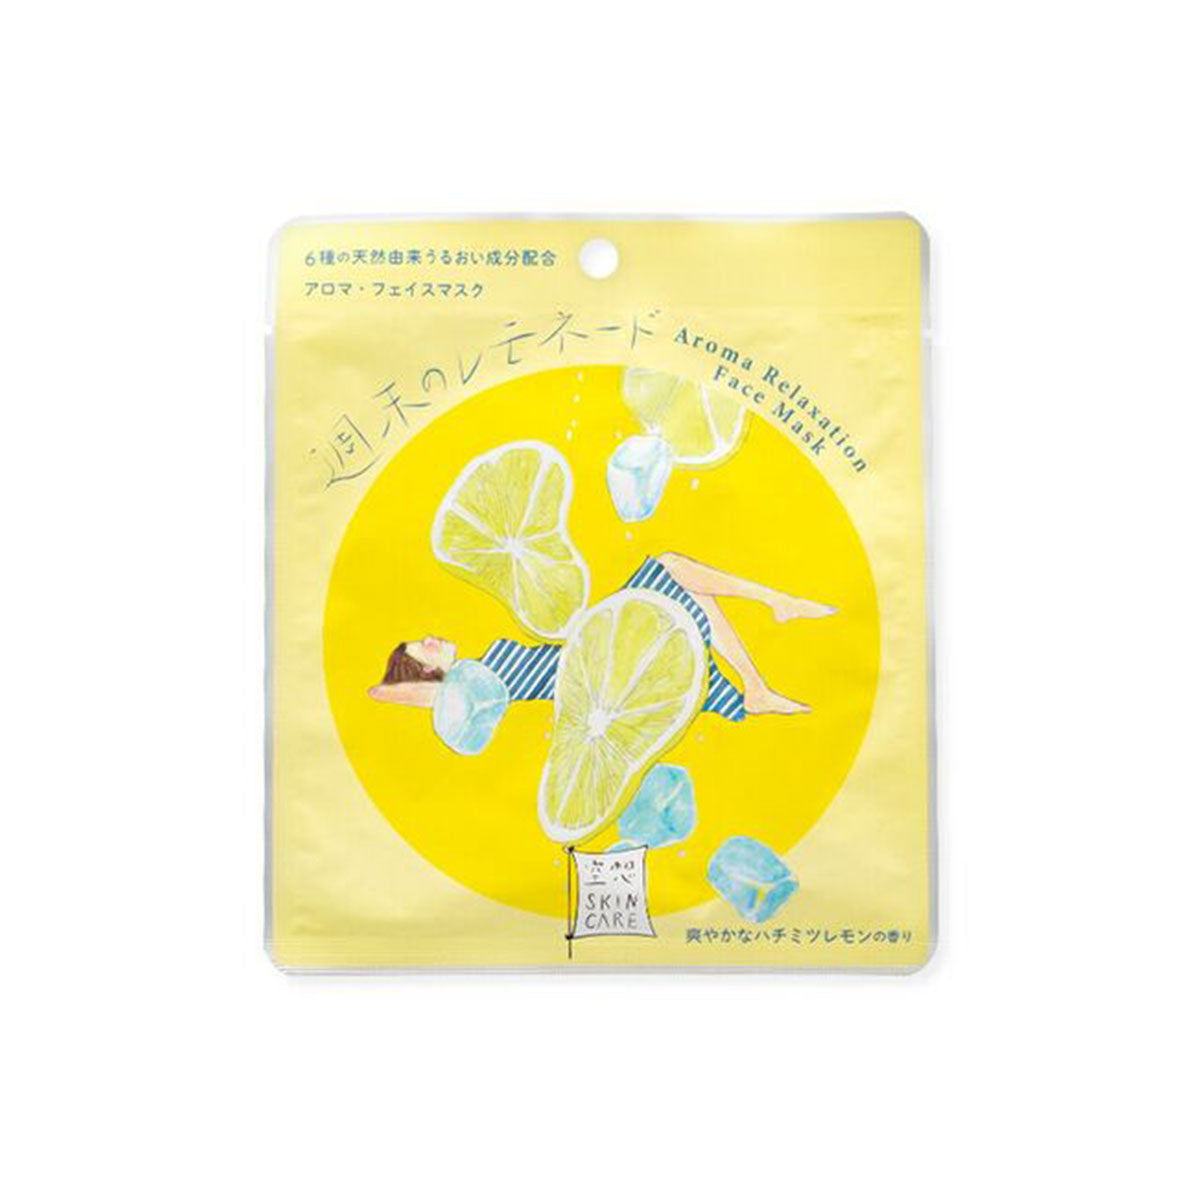 Imaginary Aroma Relaxation Set (Mask & Bath Salt) #Lemonade On Weekend